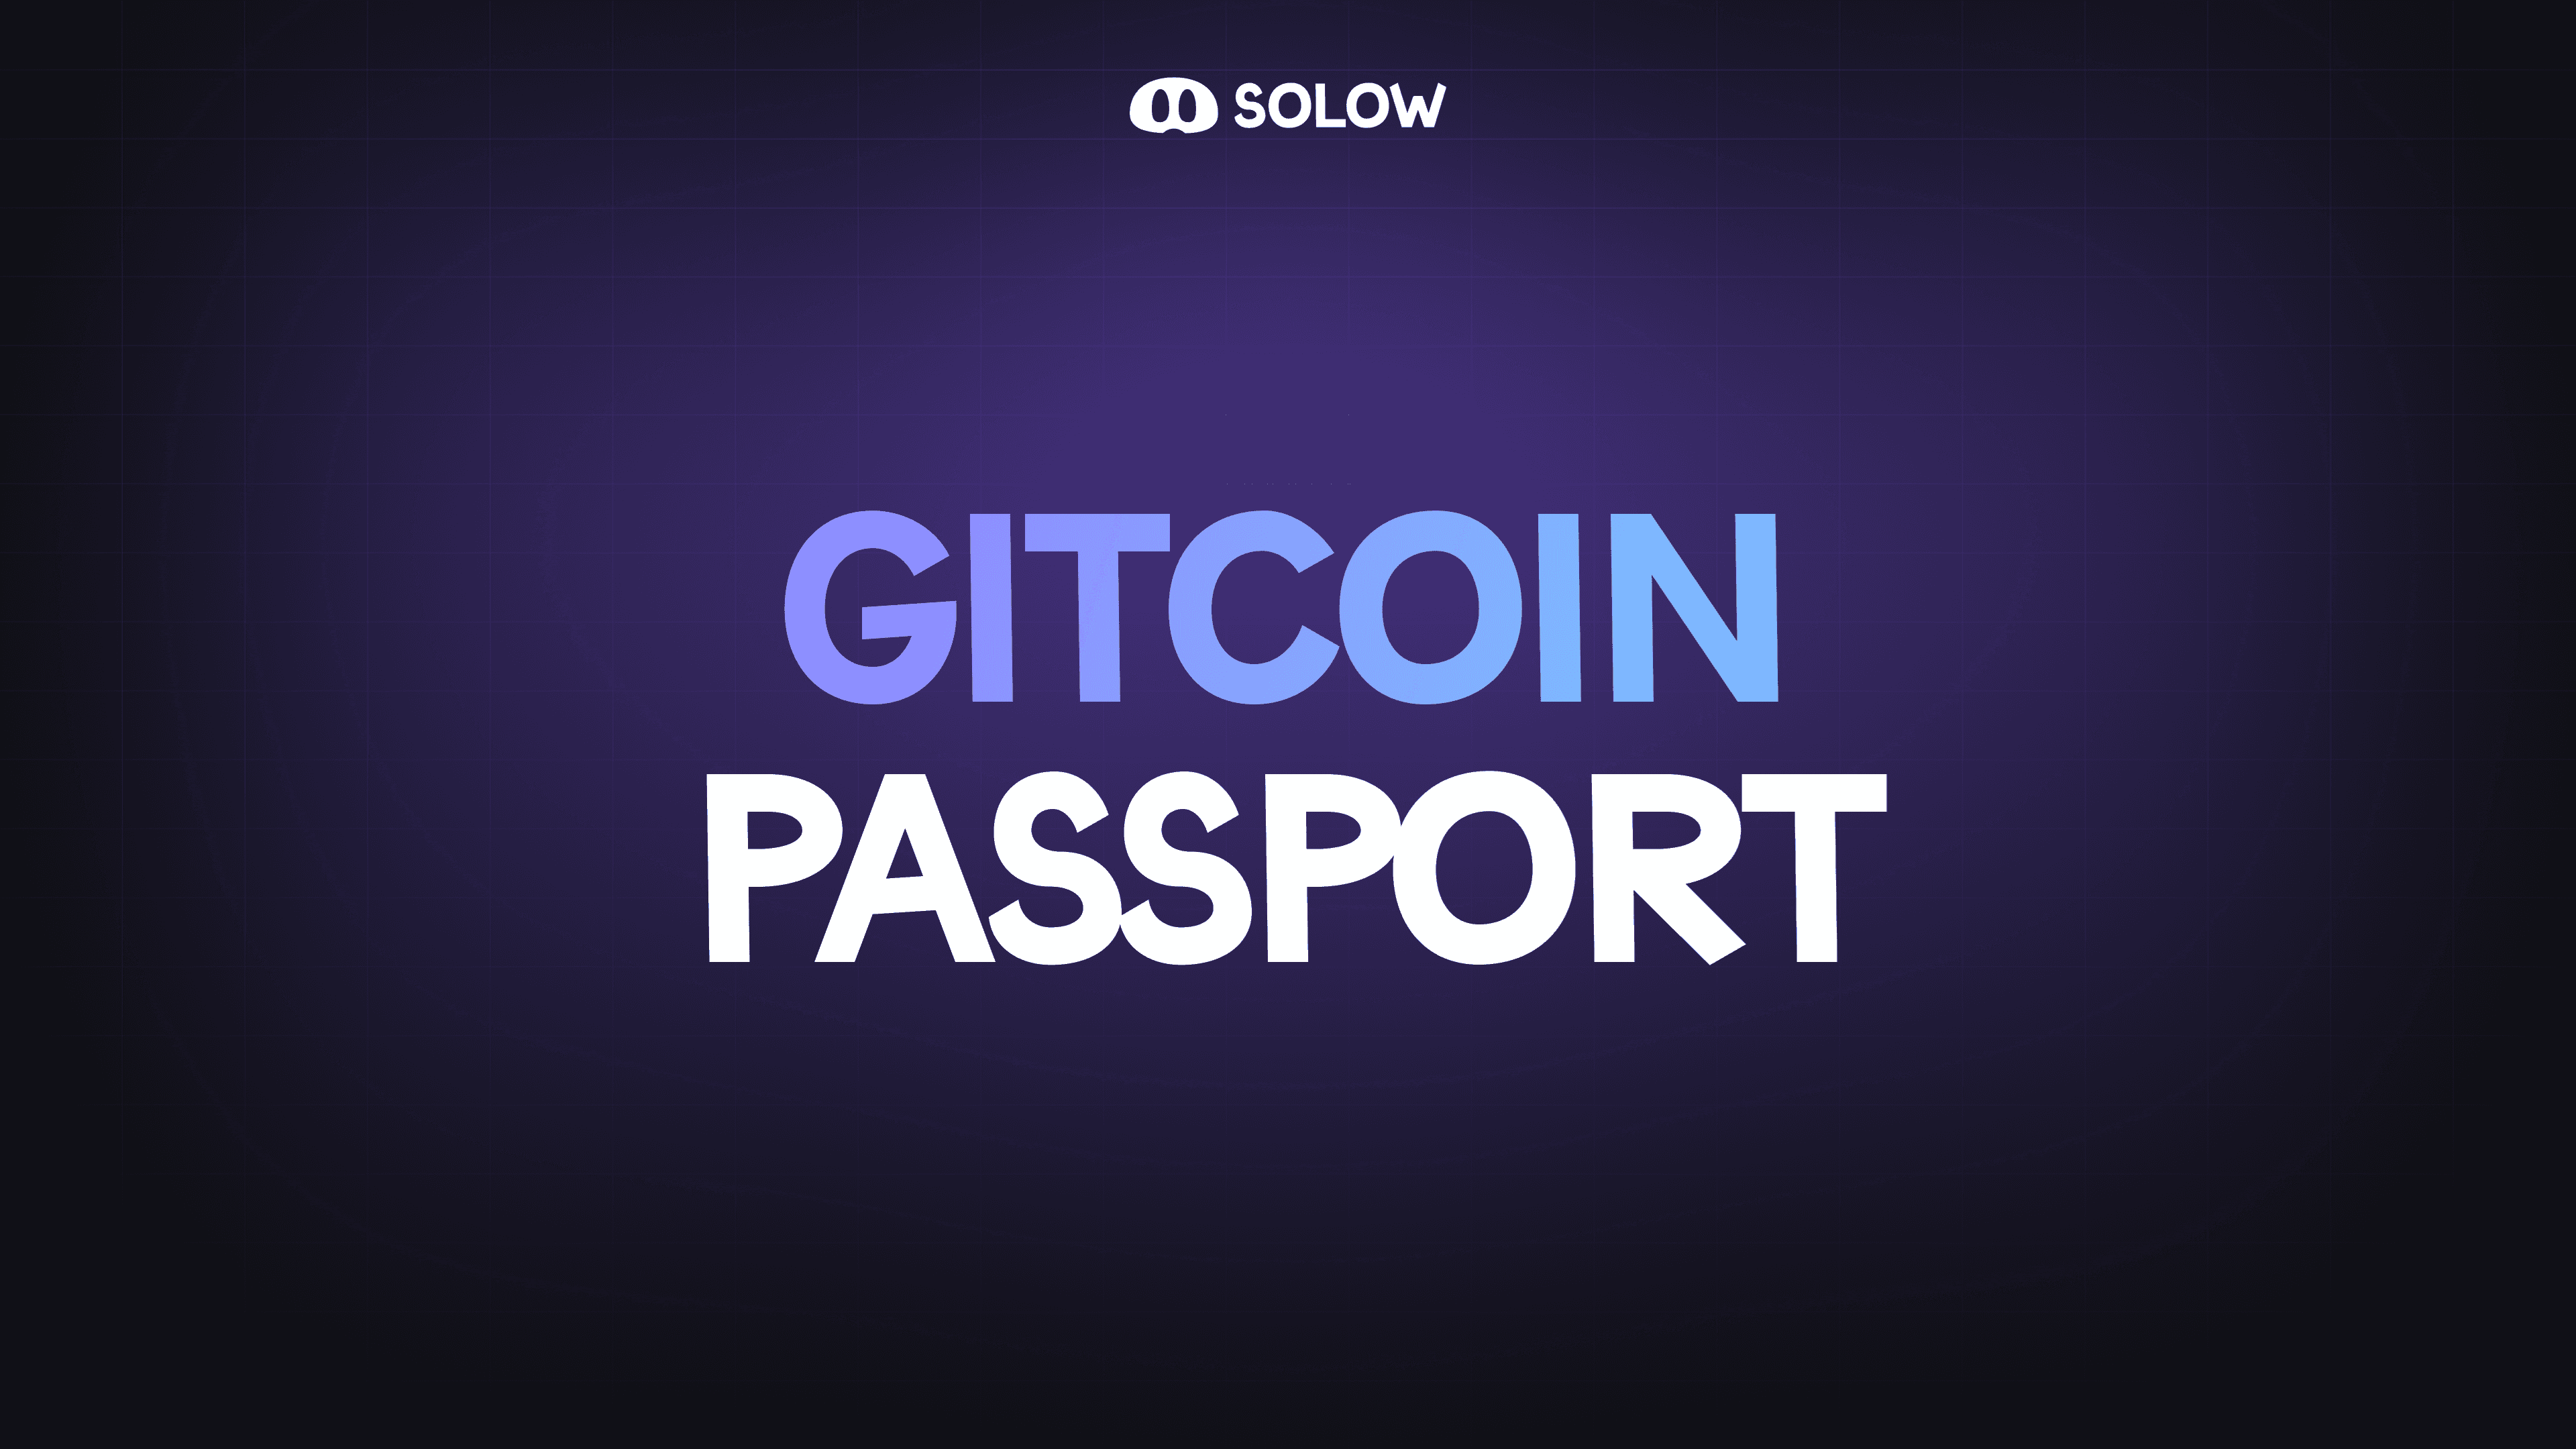 Gitcoin passport